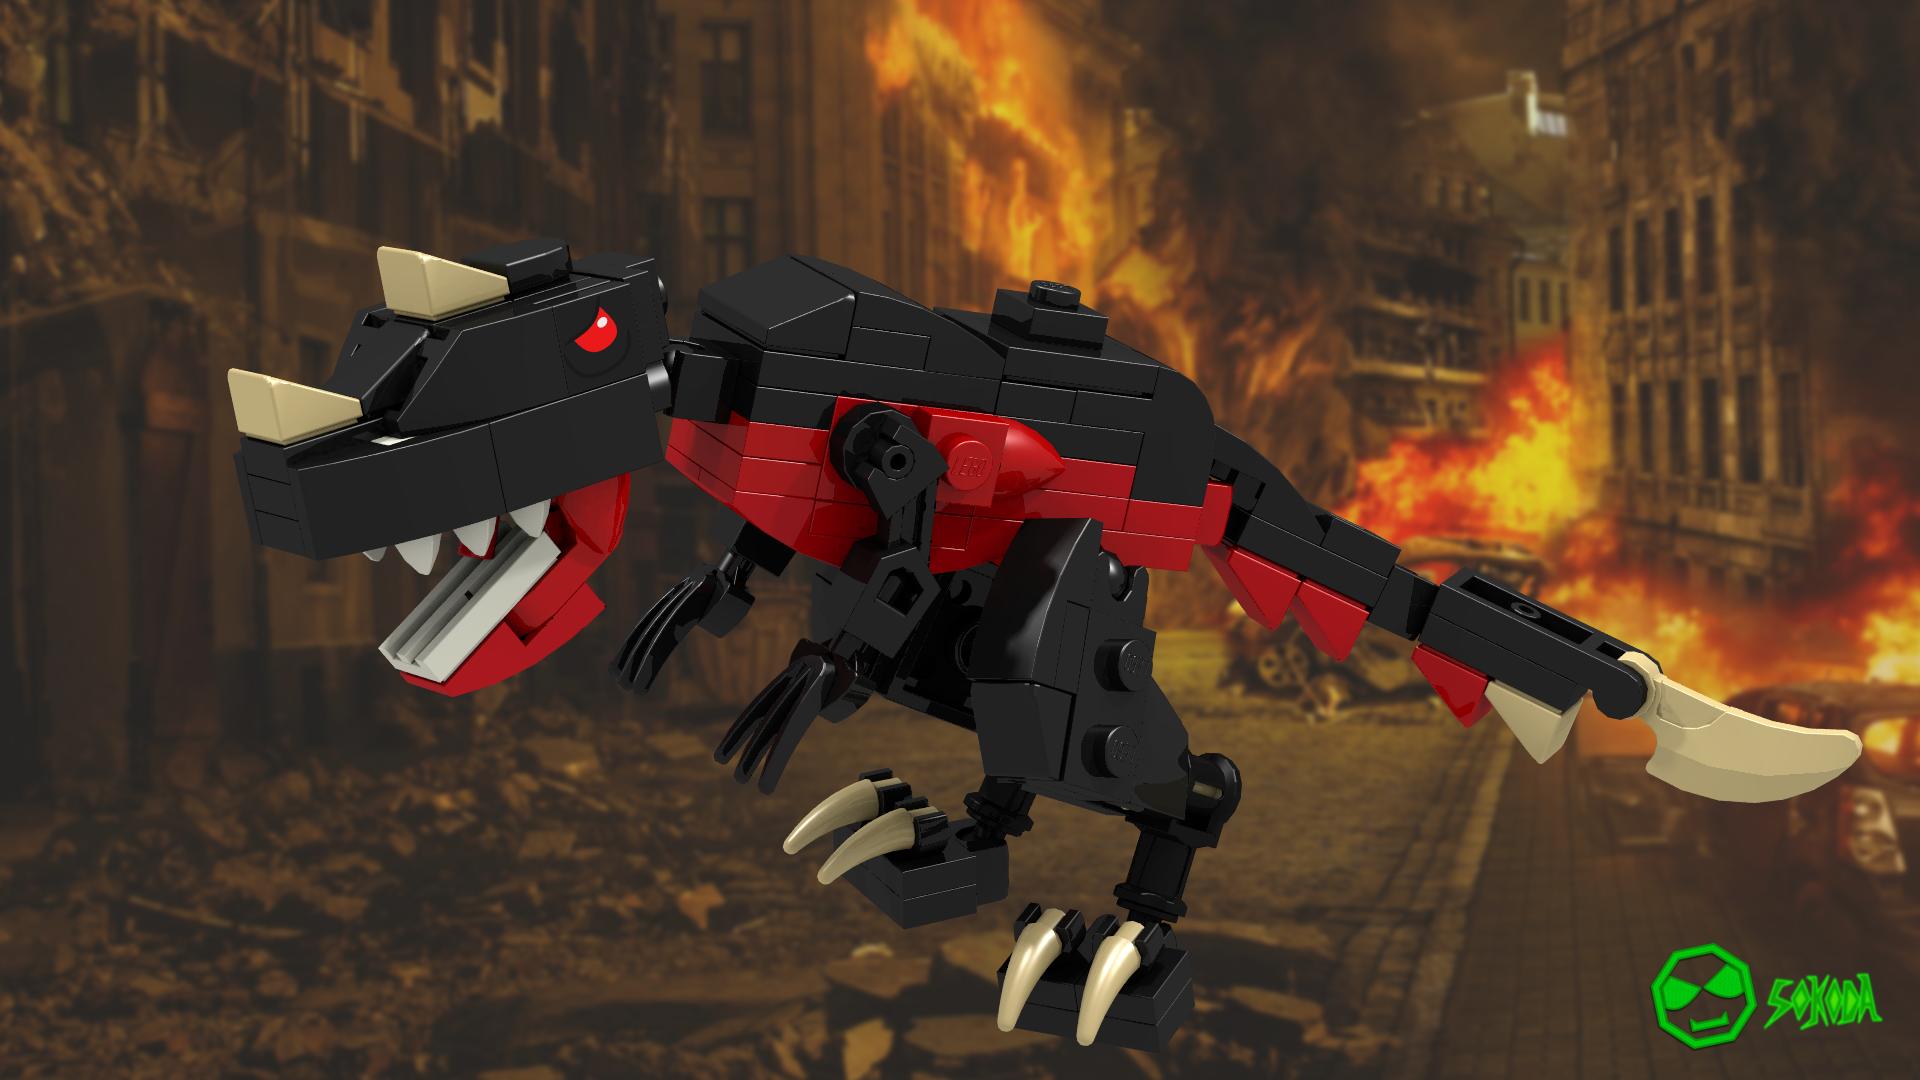 Sokoda on Twitter: "[SWB Dino Attack T-Rex #Lego #MOC #Dinosaur #DinoAttack #Dino2010 #SokodasWeeklyBuilds / Twitter